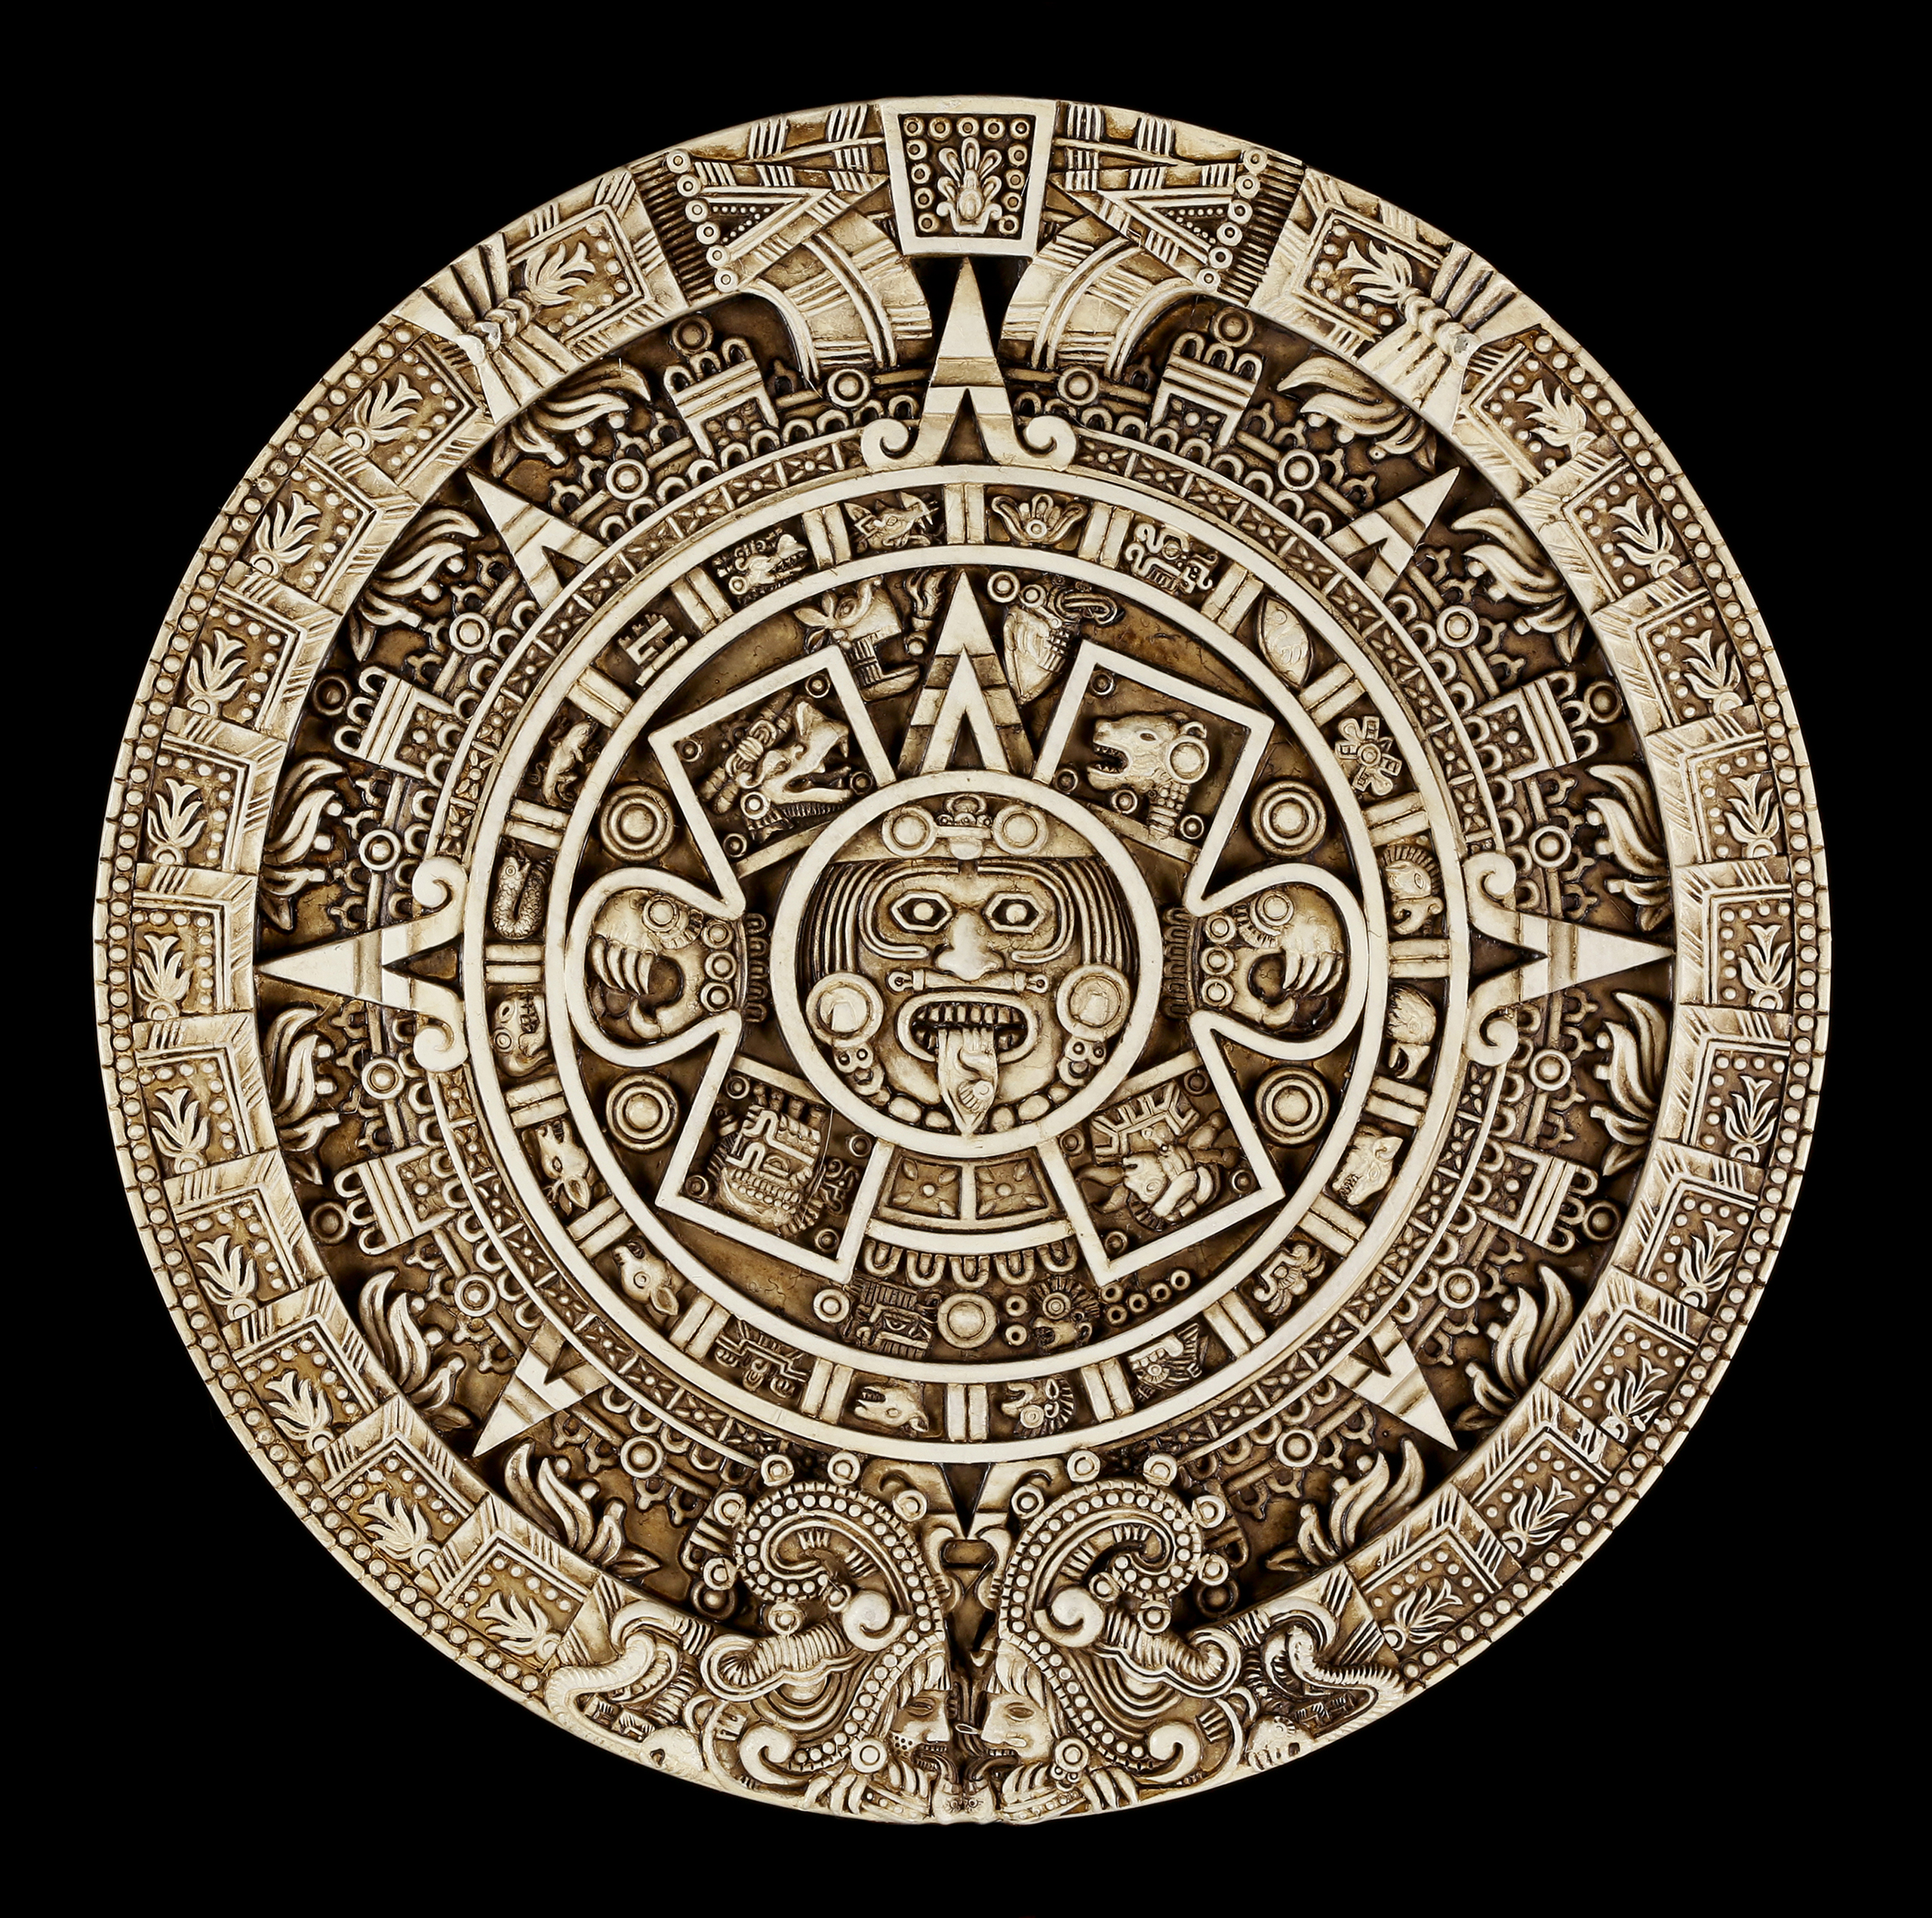 Иллюстрация календарь майя. Символ солнца Майя Ацтеки инки. Орнаменты ацтеков Майя инков. Узоры Майя и ацтеков. Мандала Майя инки Ацтеки.